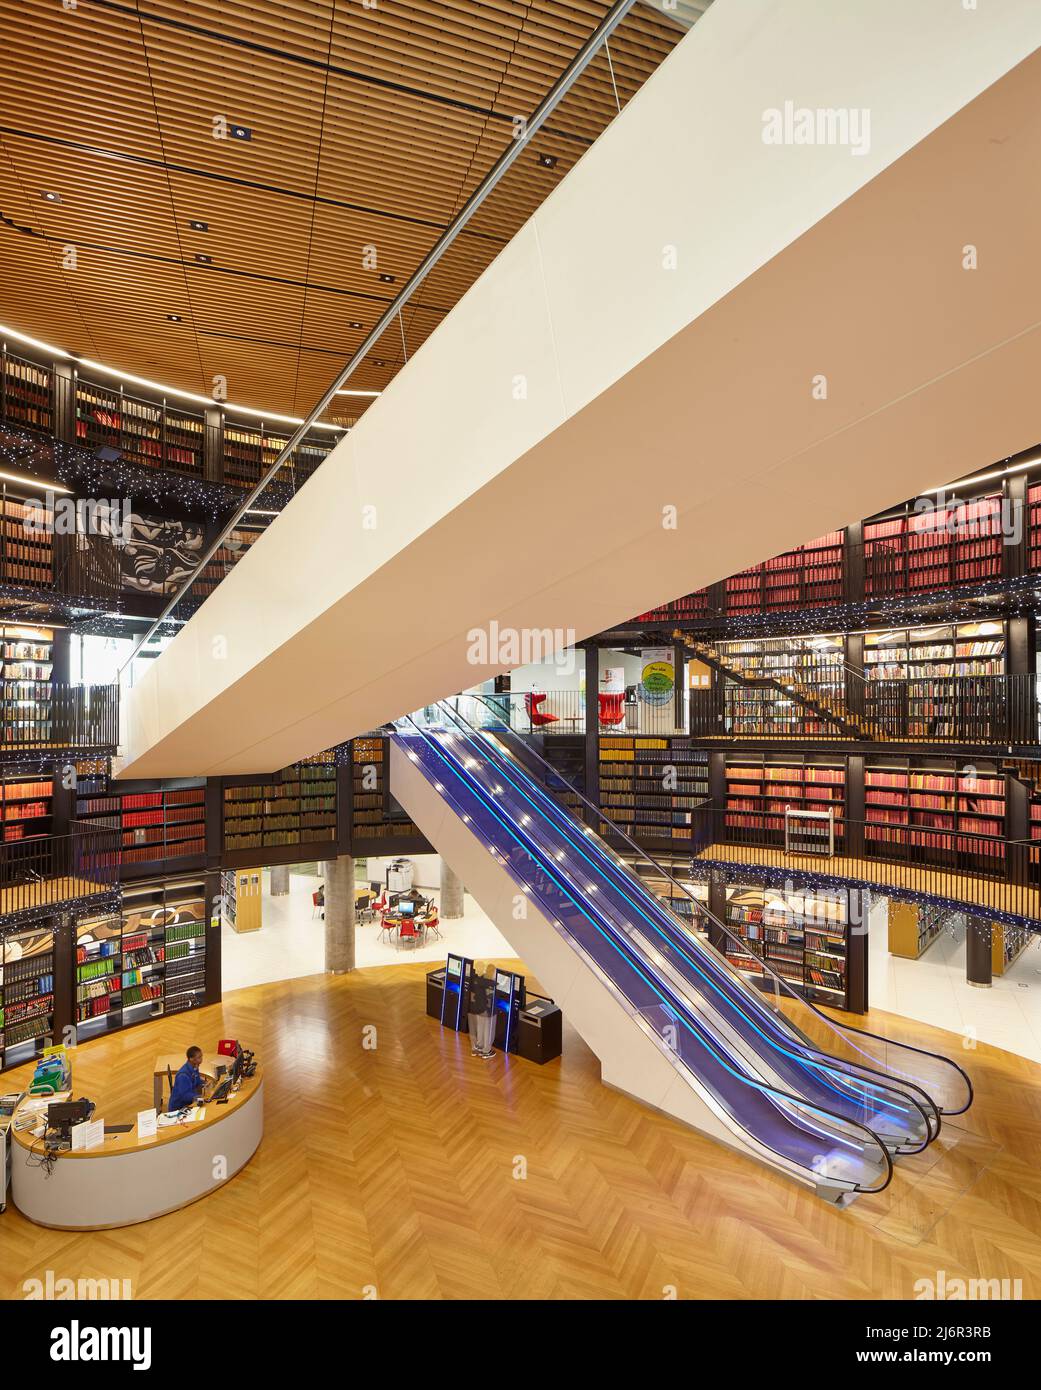 Library of Birmingham interior view Stock Photo